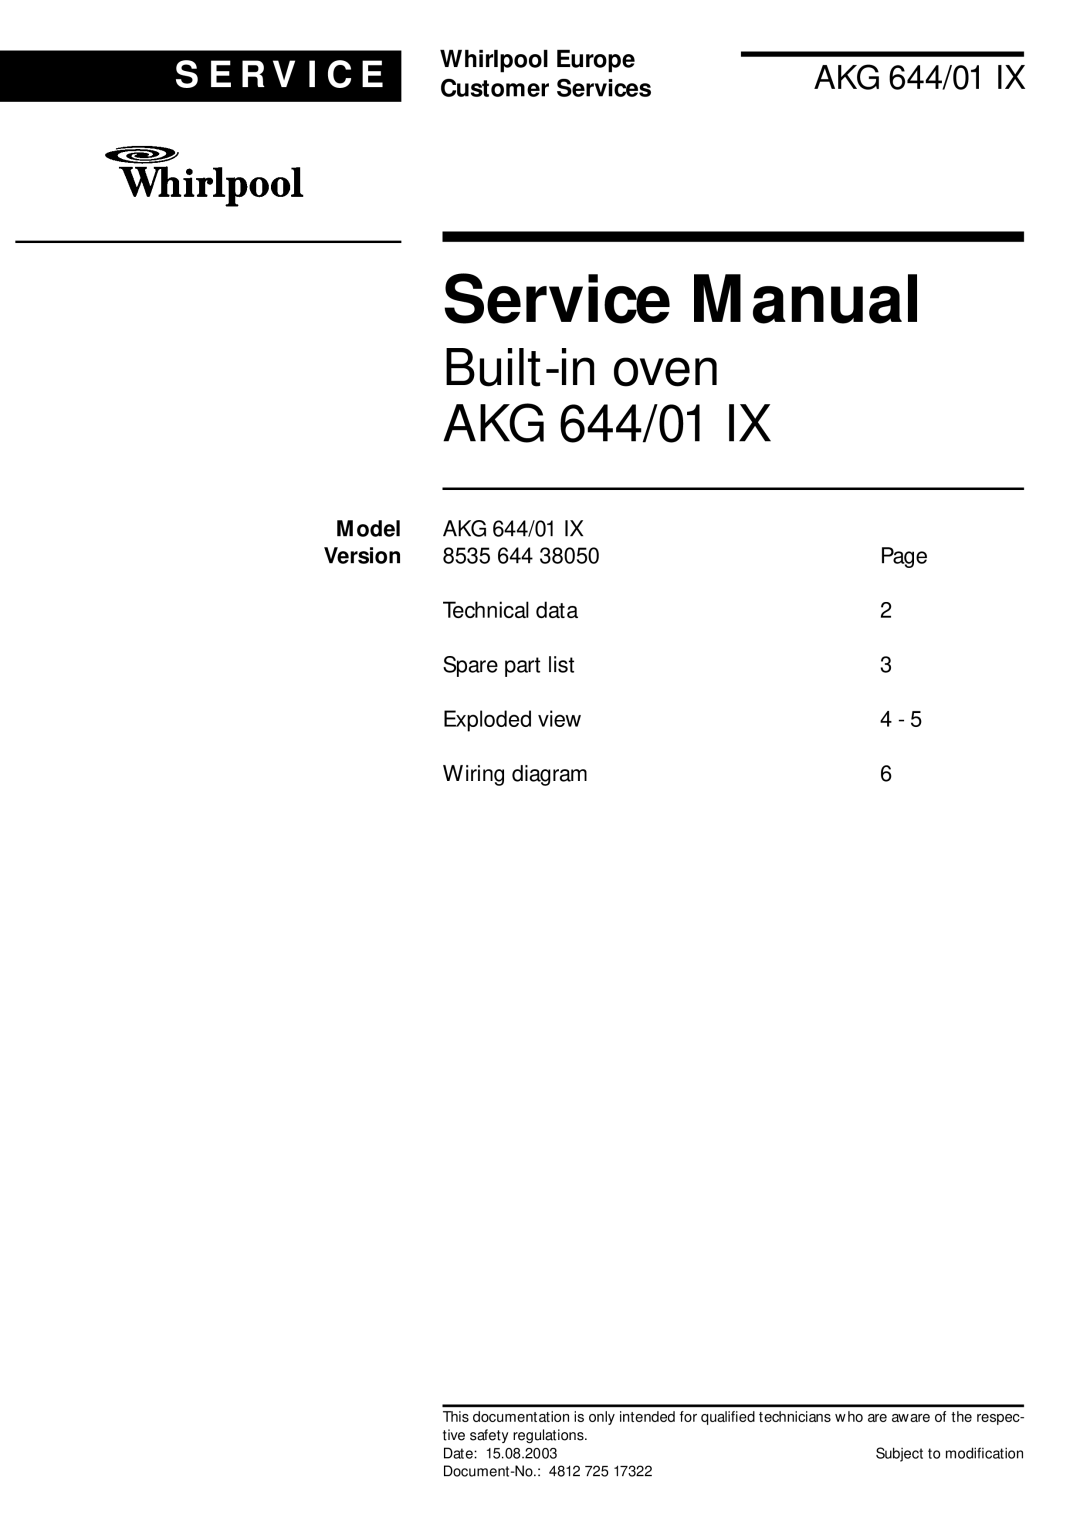 Whirlpool service manual Model, Ice Cube Maker AGB 022/01/G/WP, S E R V I C E, Whirlpool Europe, Customer Services 